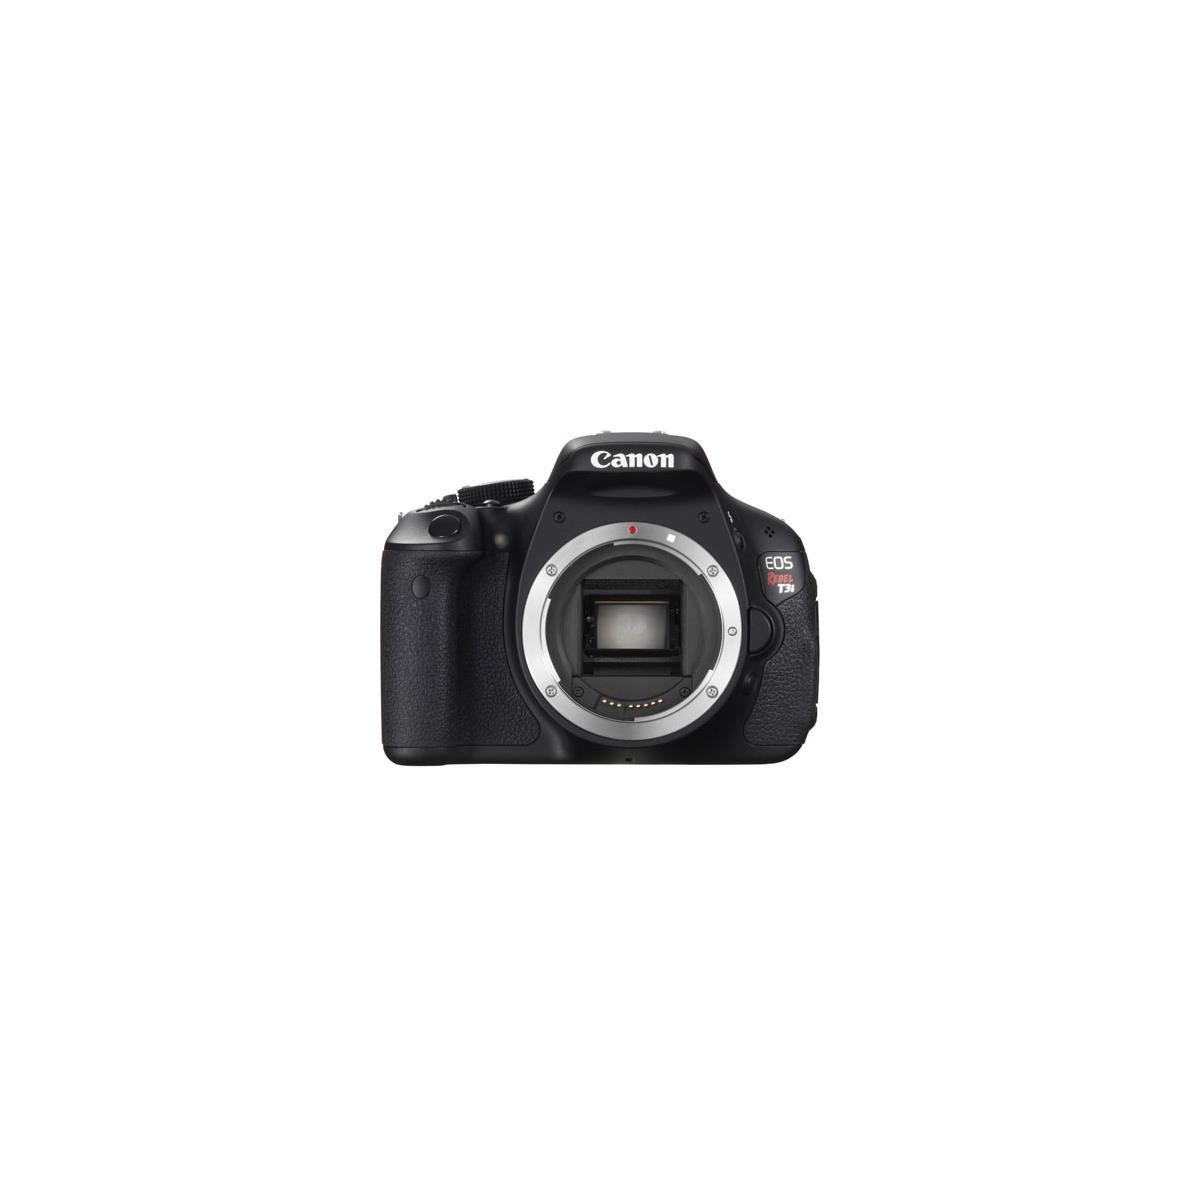 Image of Canon EOS Rebel T3i DSLR Camera